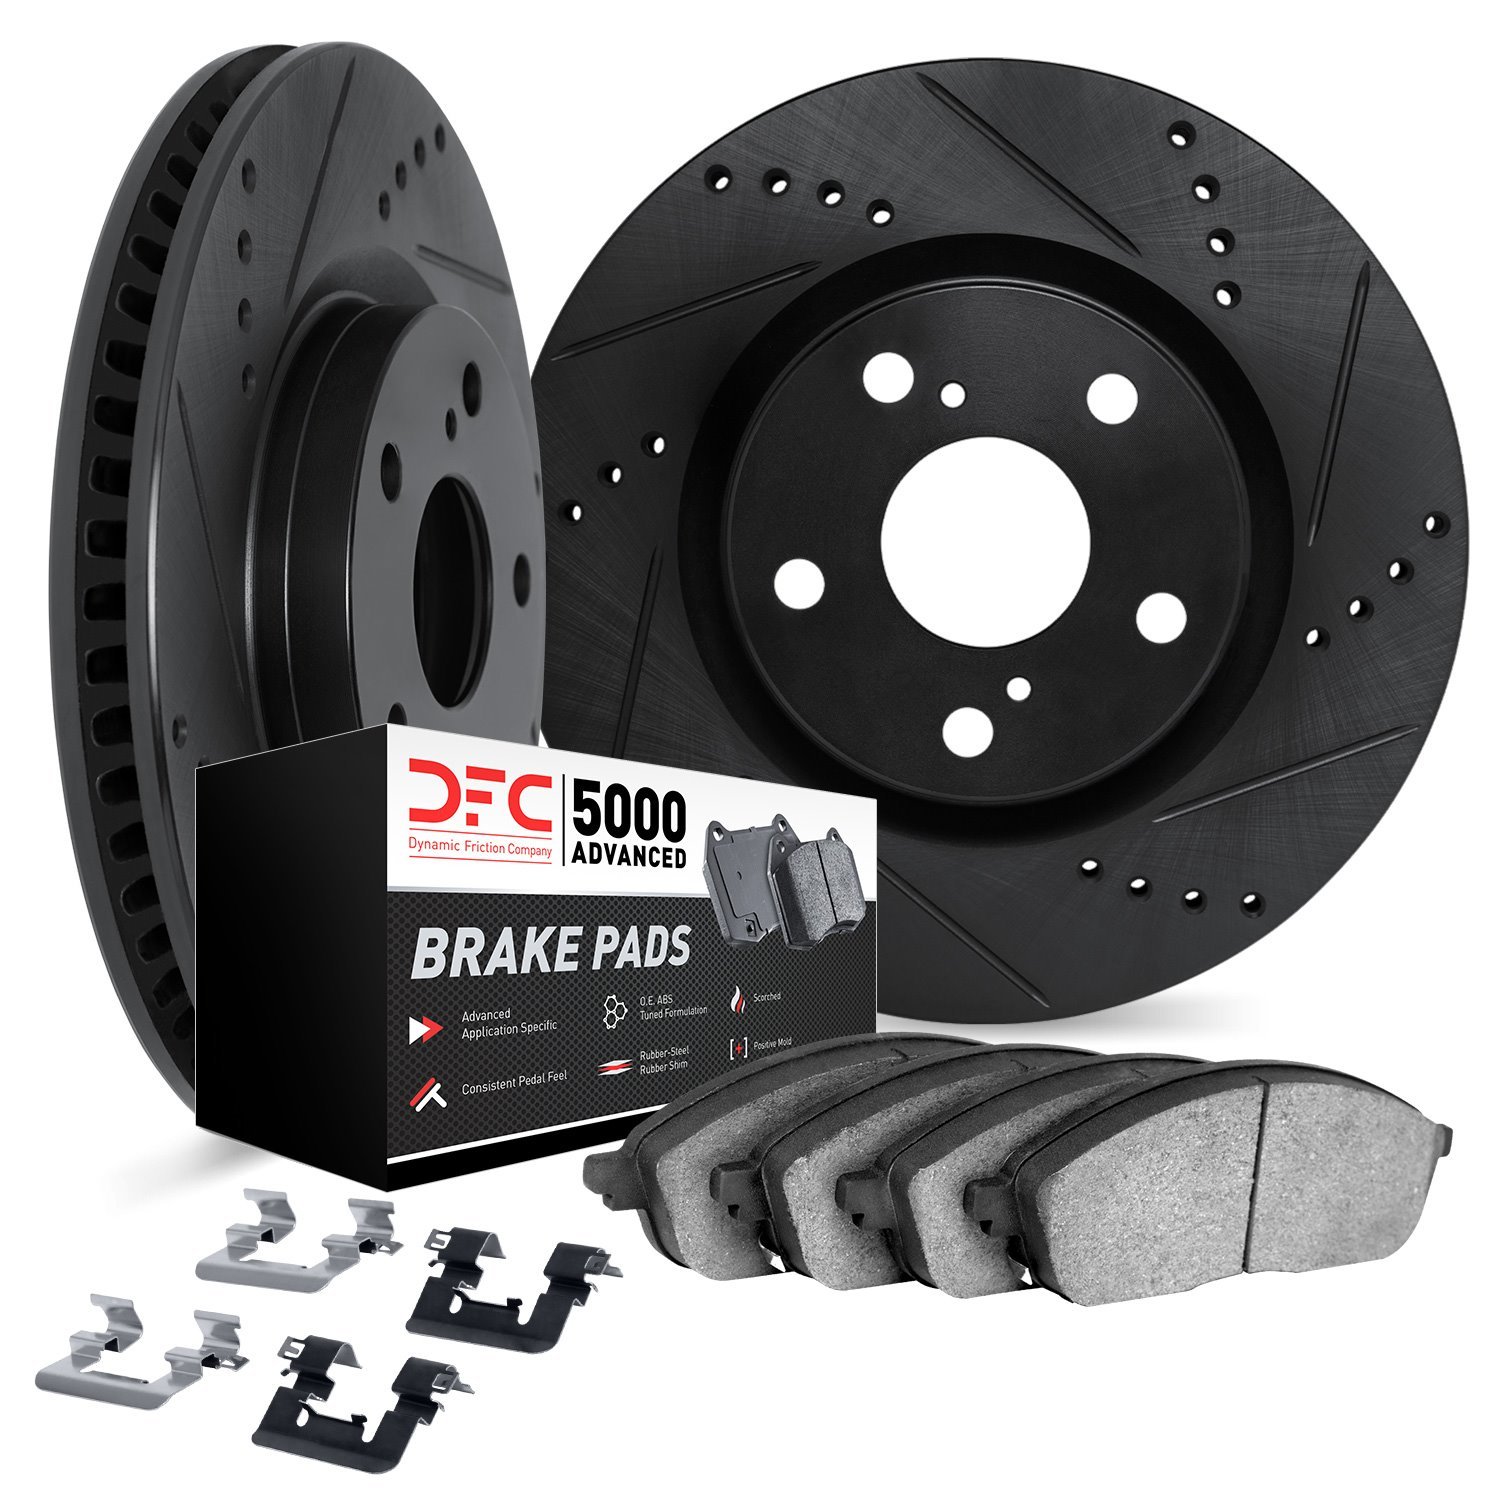 8512-31743 Drilled/Slotted Brake Rotors w/5000 Advanced Brake Pads Kit & Hardware [Black], Fits Select Multiple Makes/Models, Po